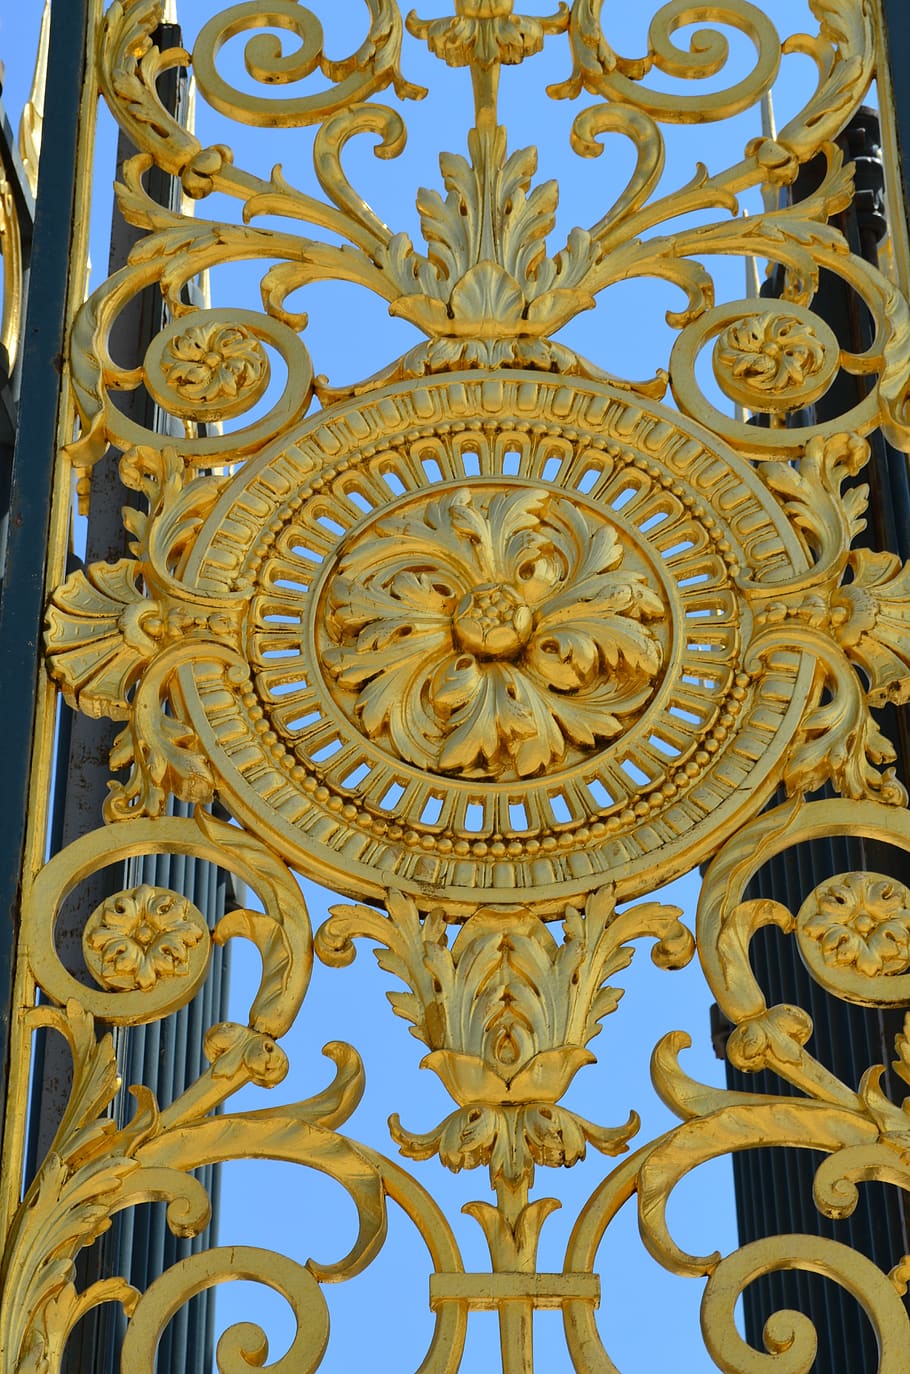 goal, gold, ornament, fence, grid, louvre, paris, baroque, splendor, palatial